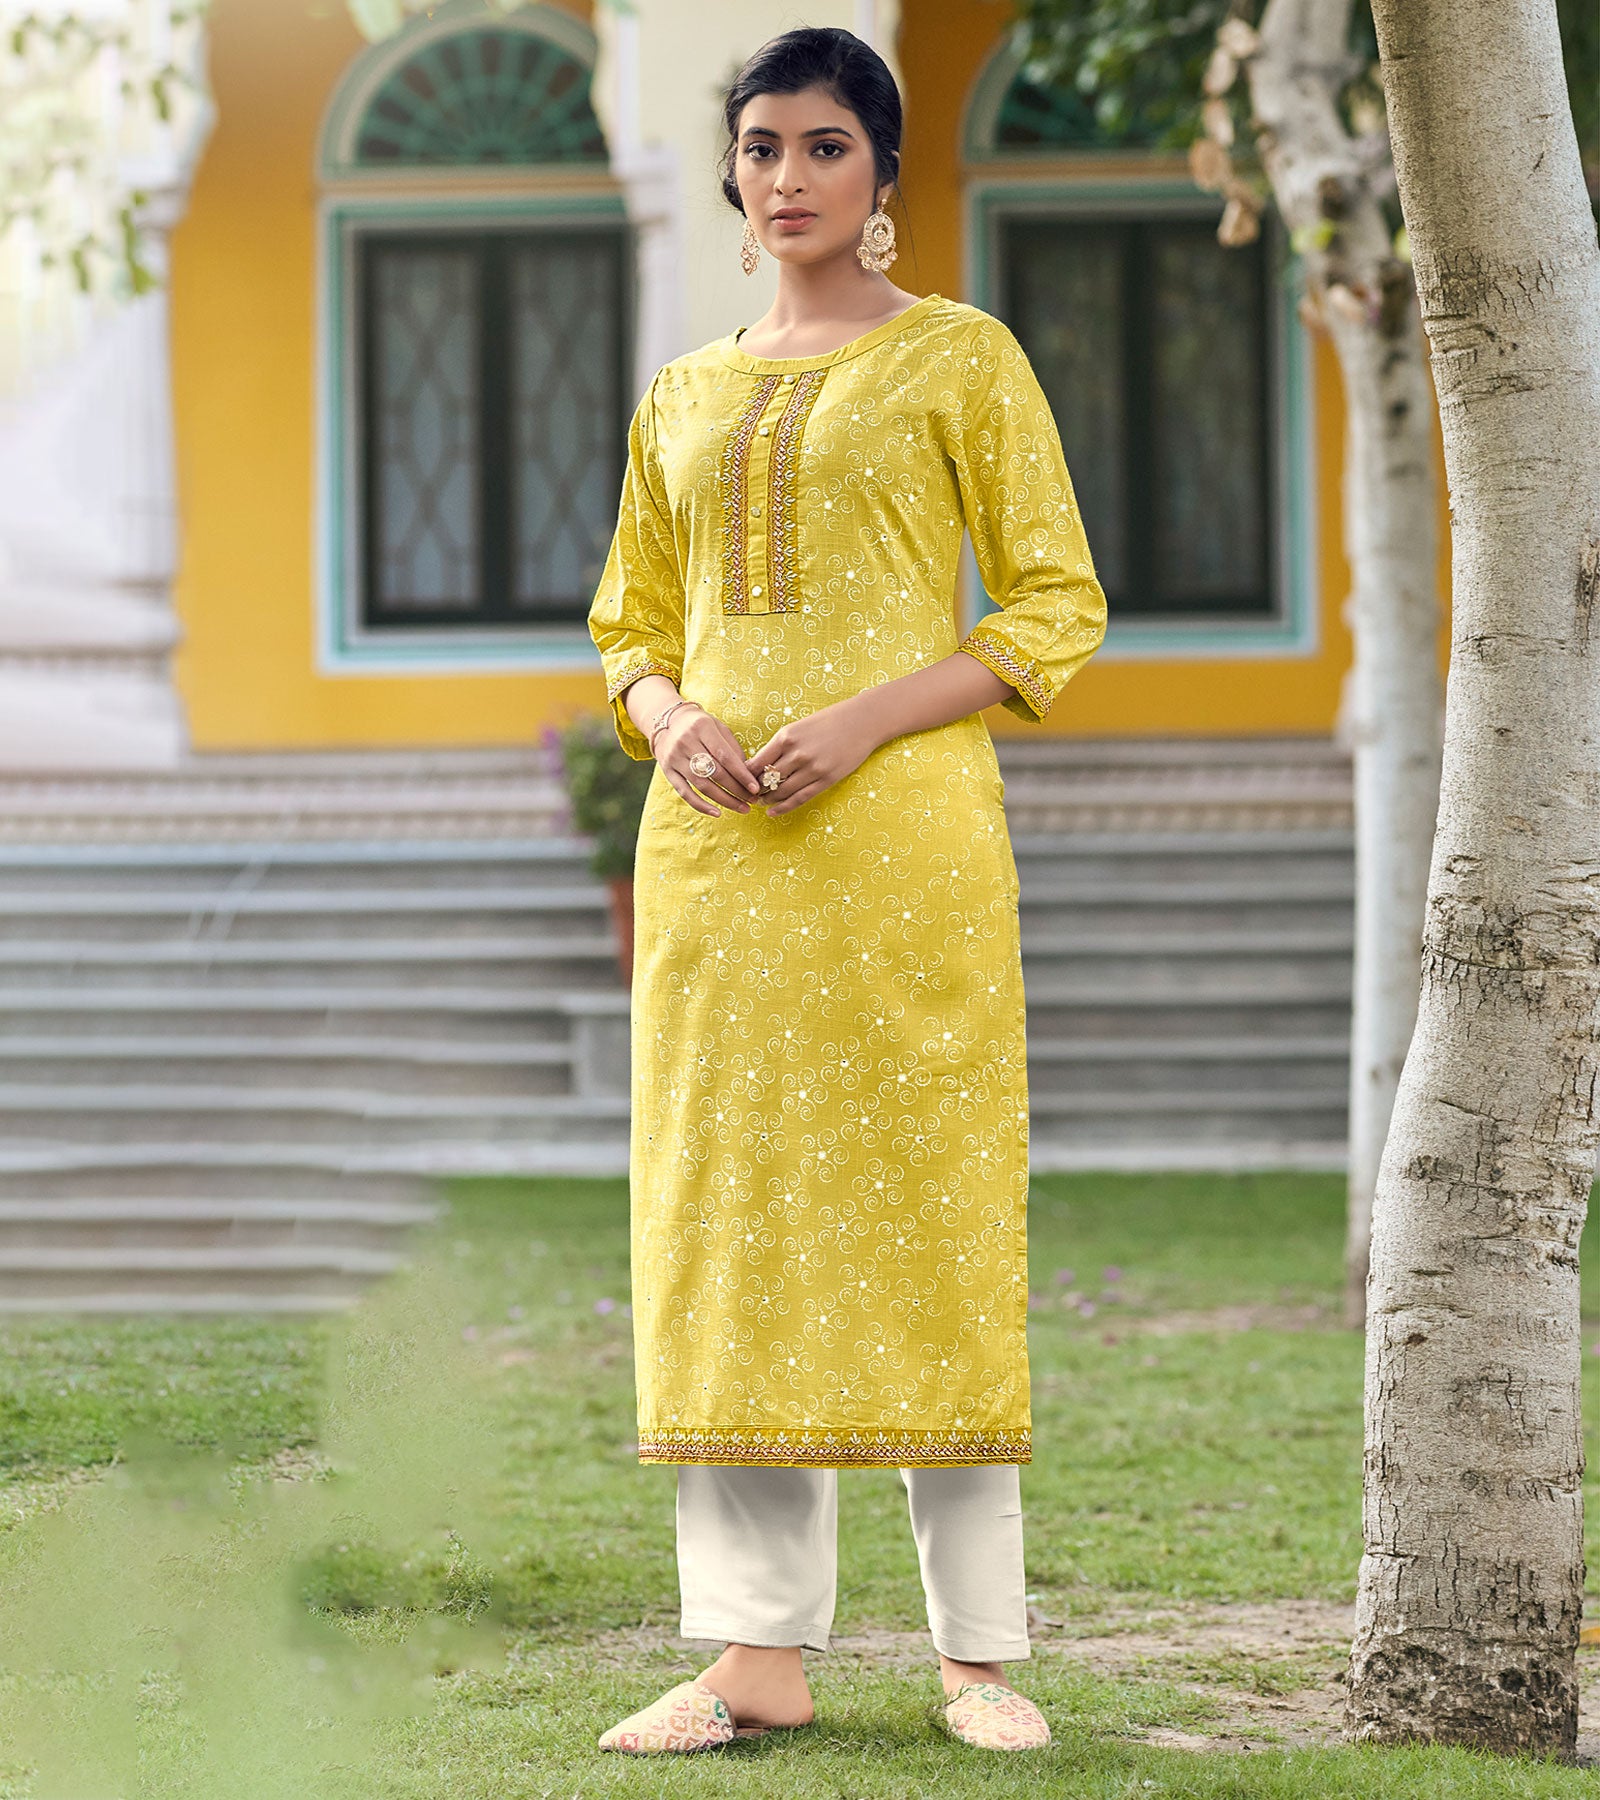 Surbhi Jyoti is a walking ray of sunshine in this yellow kurti